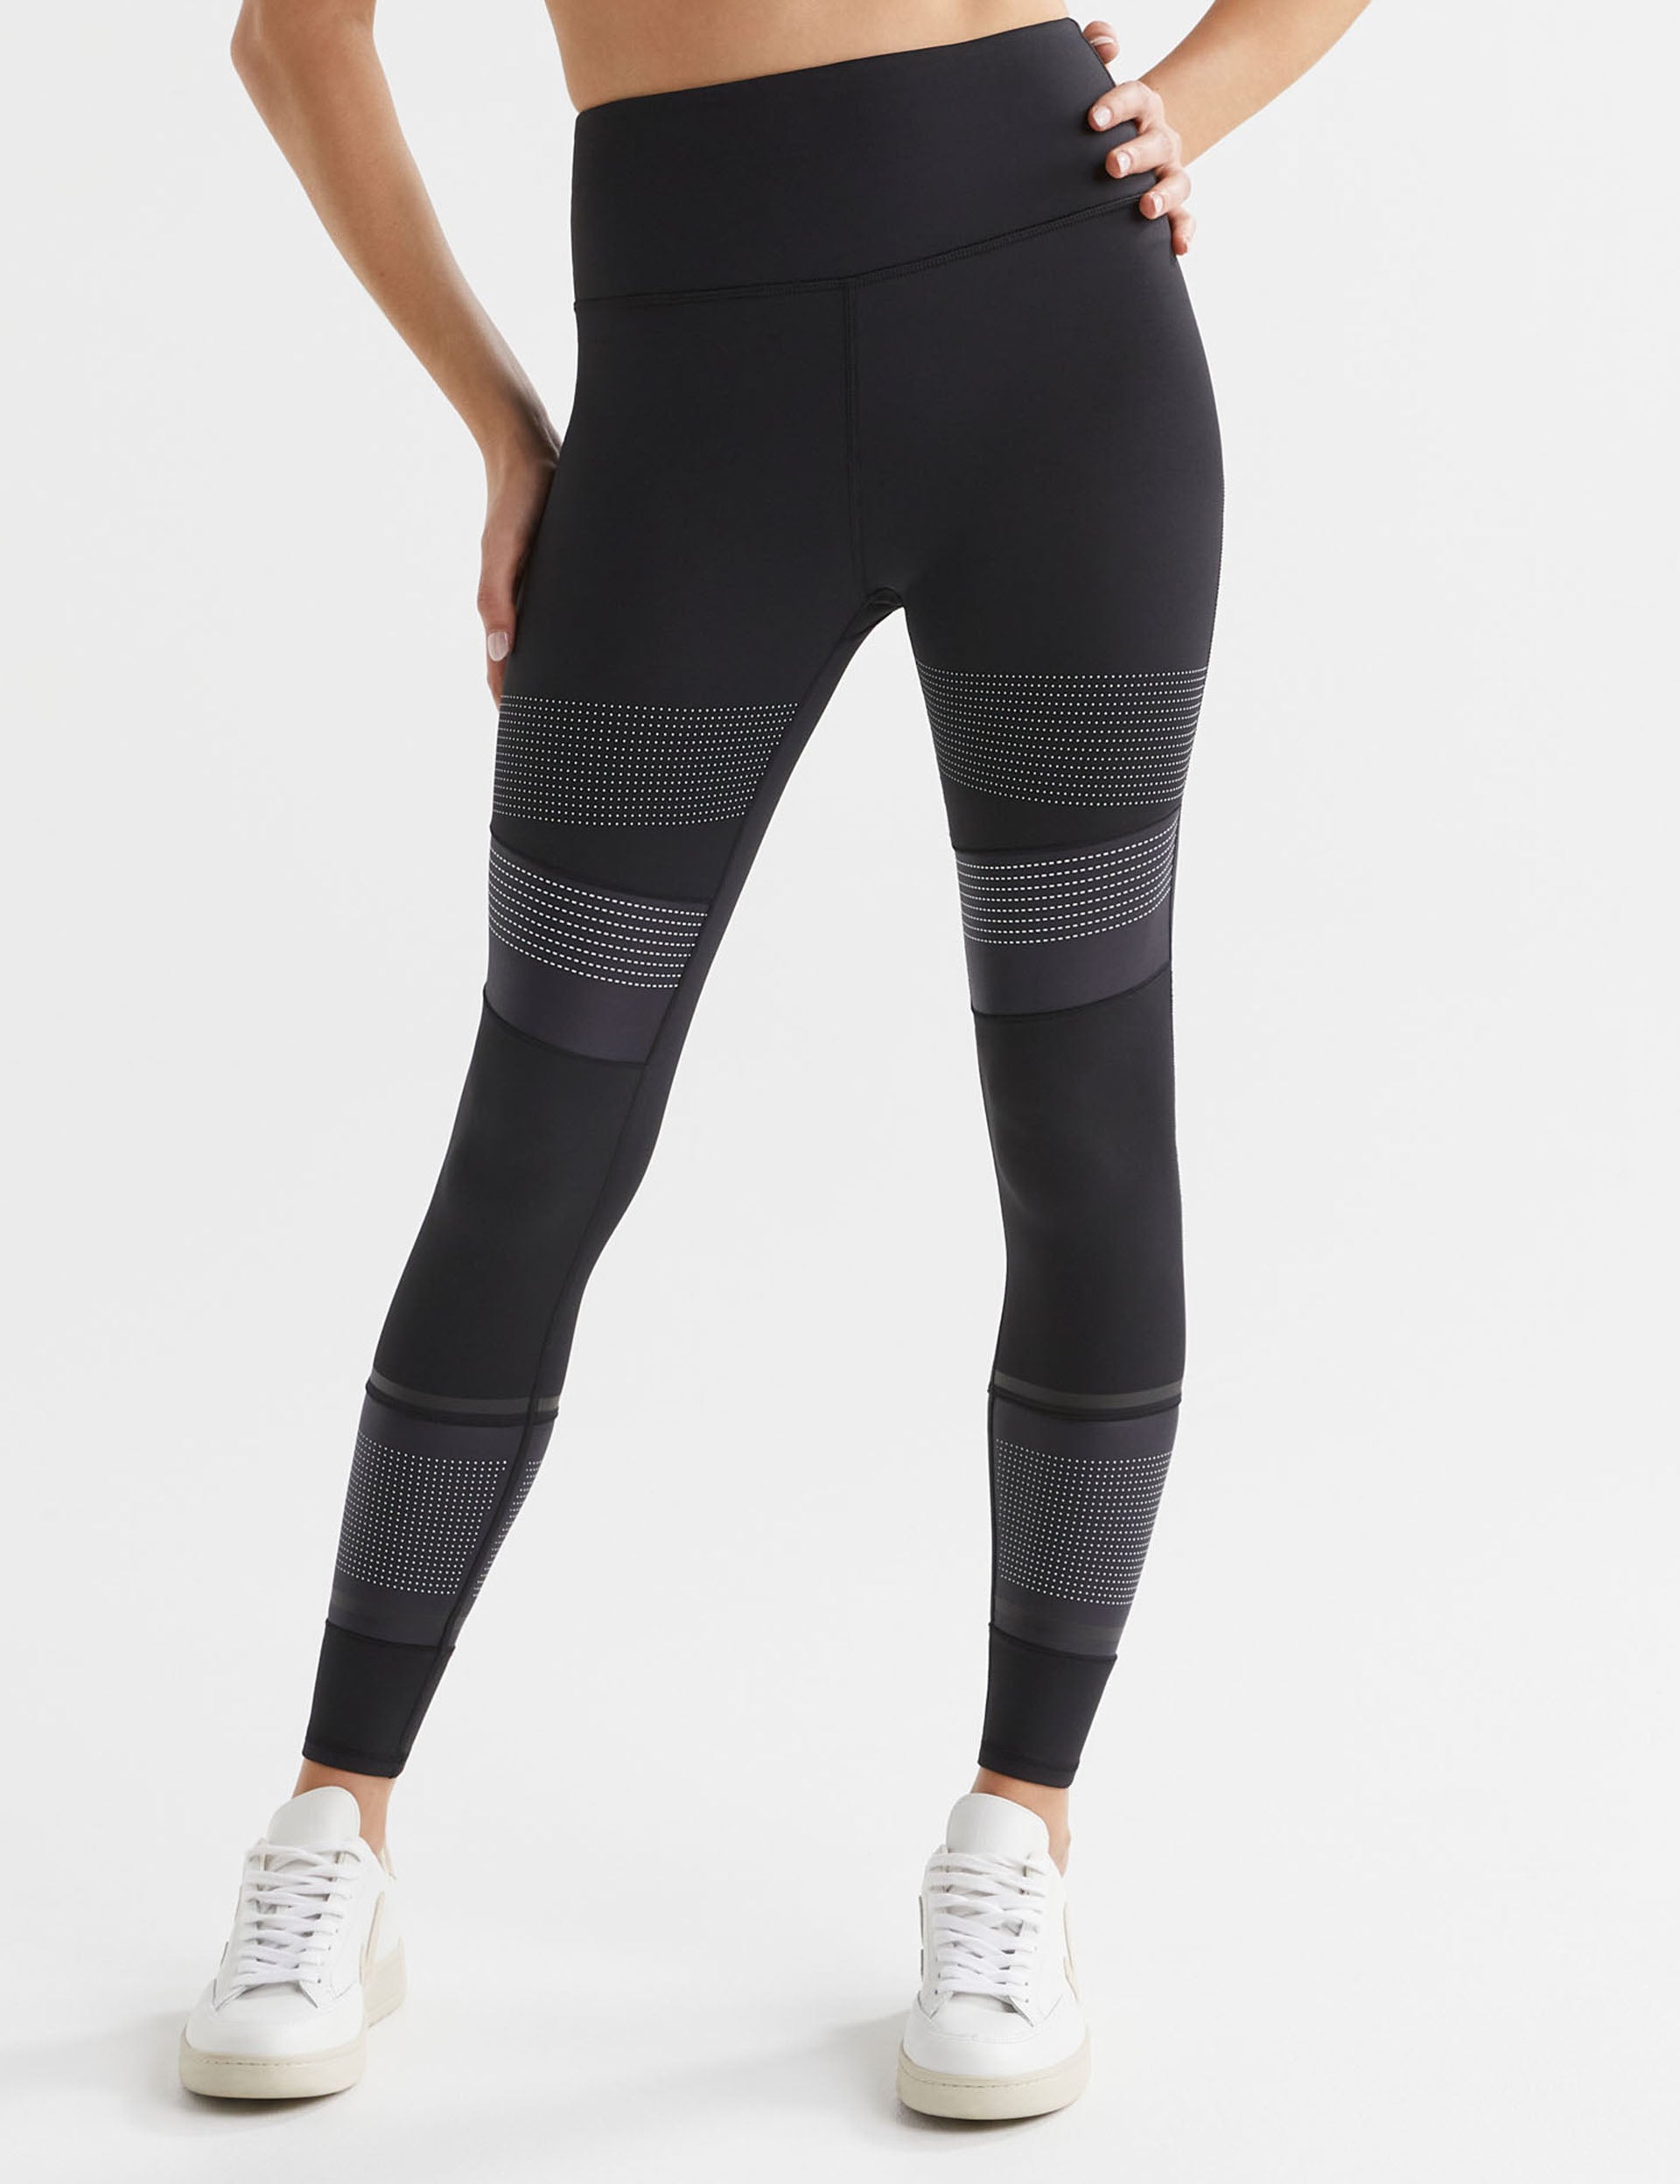 Lululemon Legging Fabric Guide: Everlux for Super Sweaty Workouts | Fashion  Jackson | Leggings fashion, Outfits with leggings, Black leggings outfit